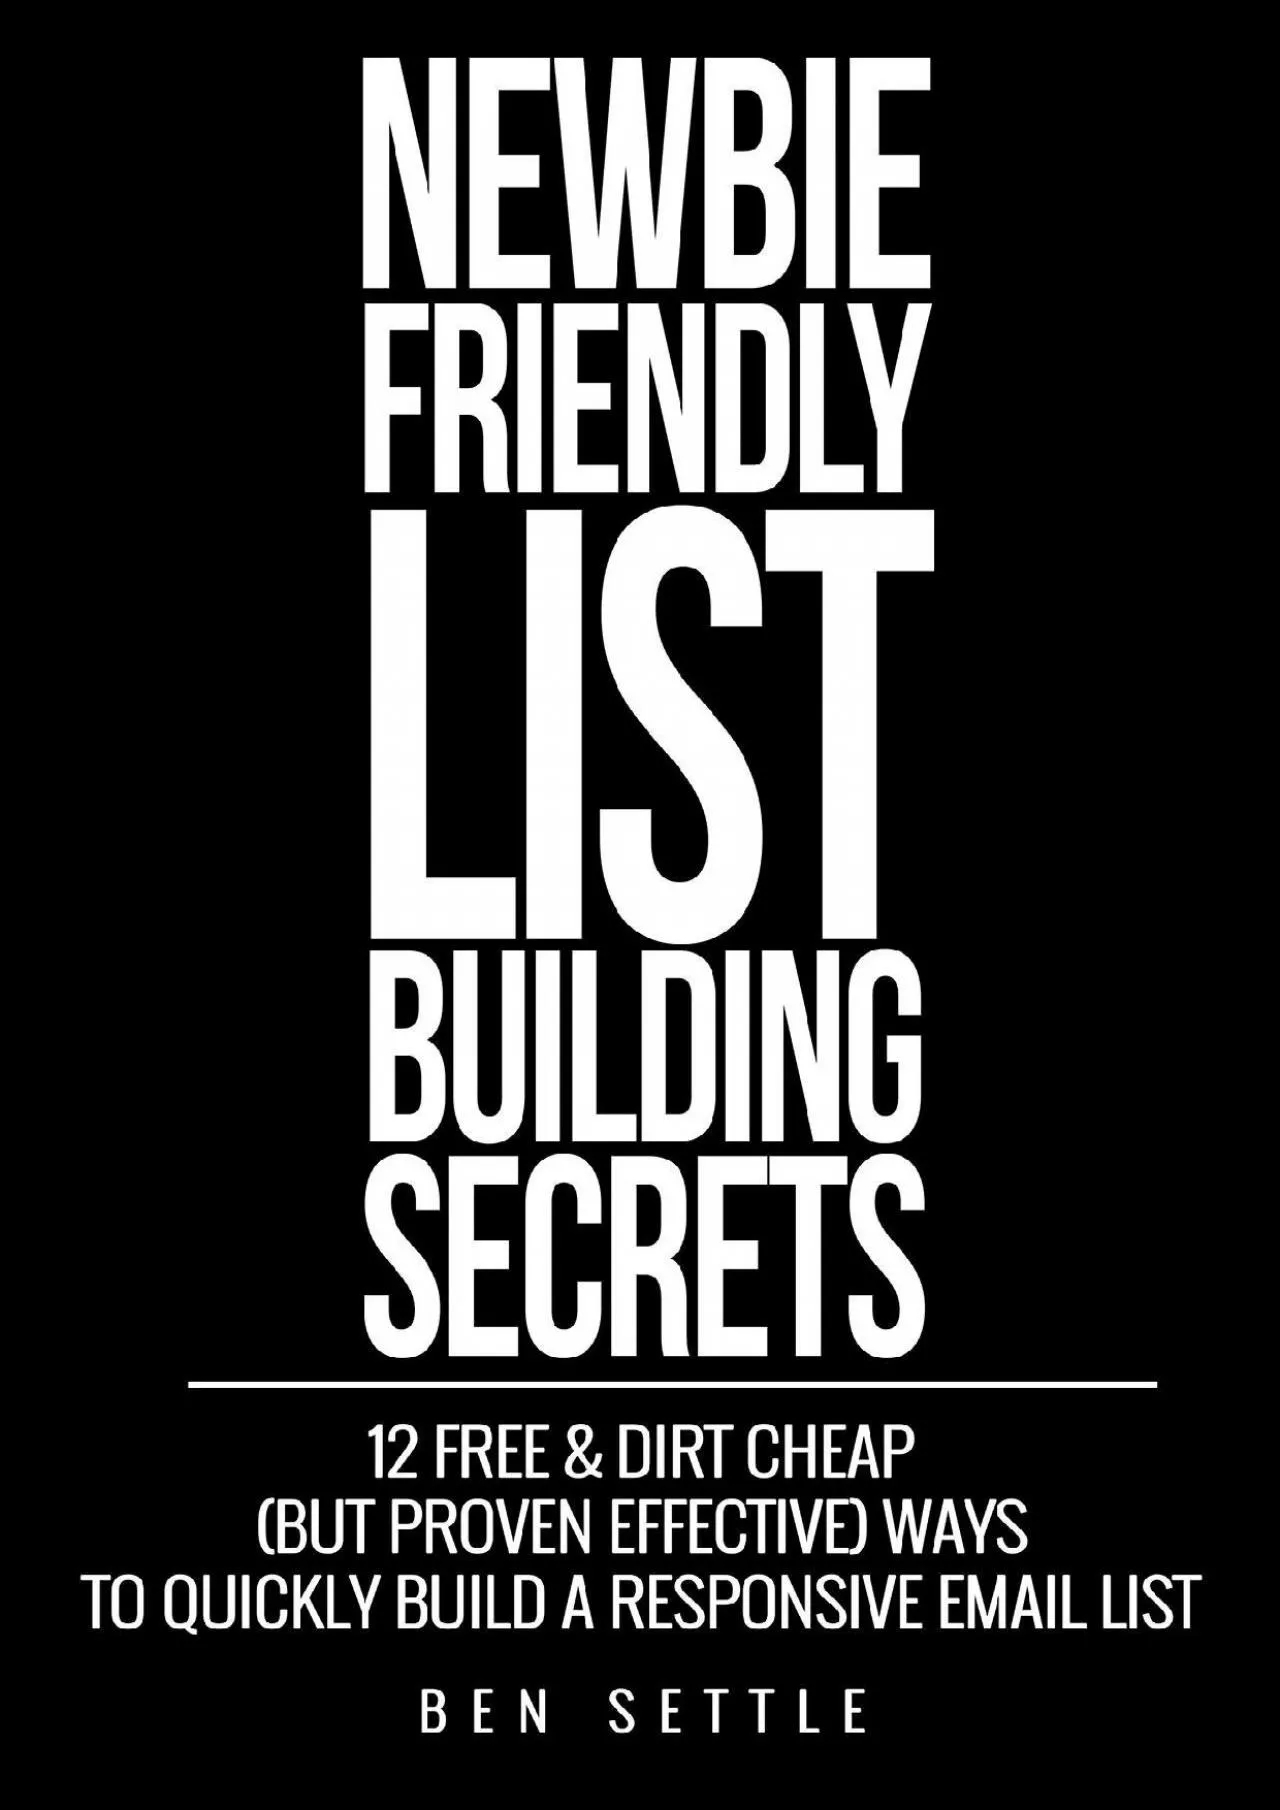 Newbie Friendly List Building Secrets 12 Free  Dirt Cheap but Proven Effective Ways to